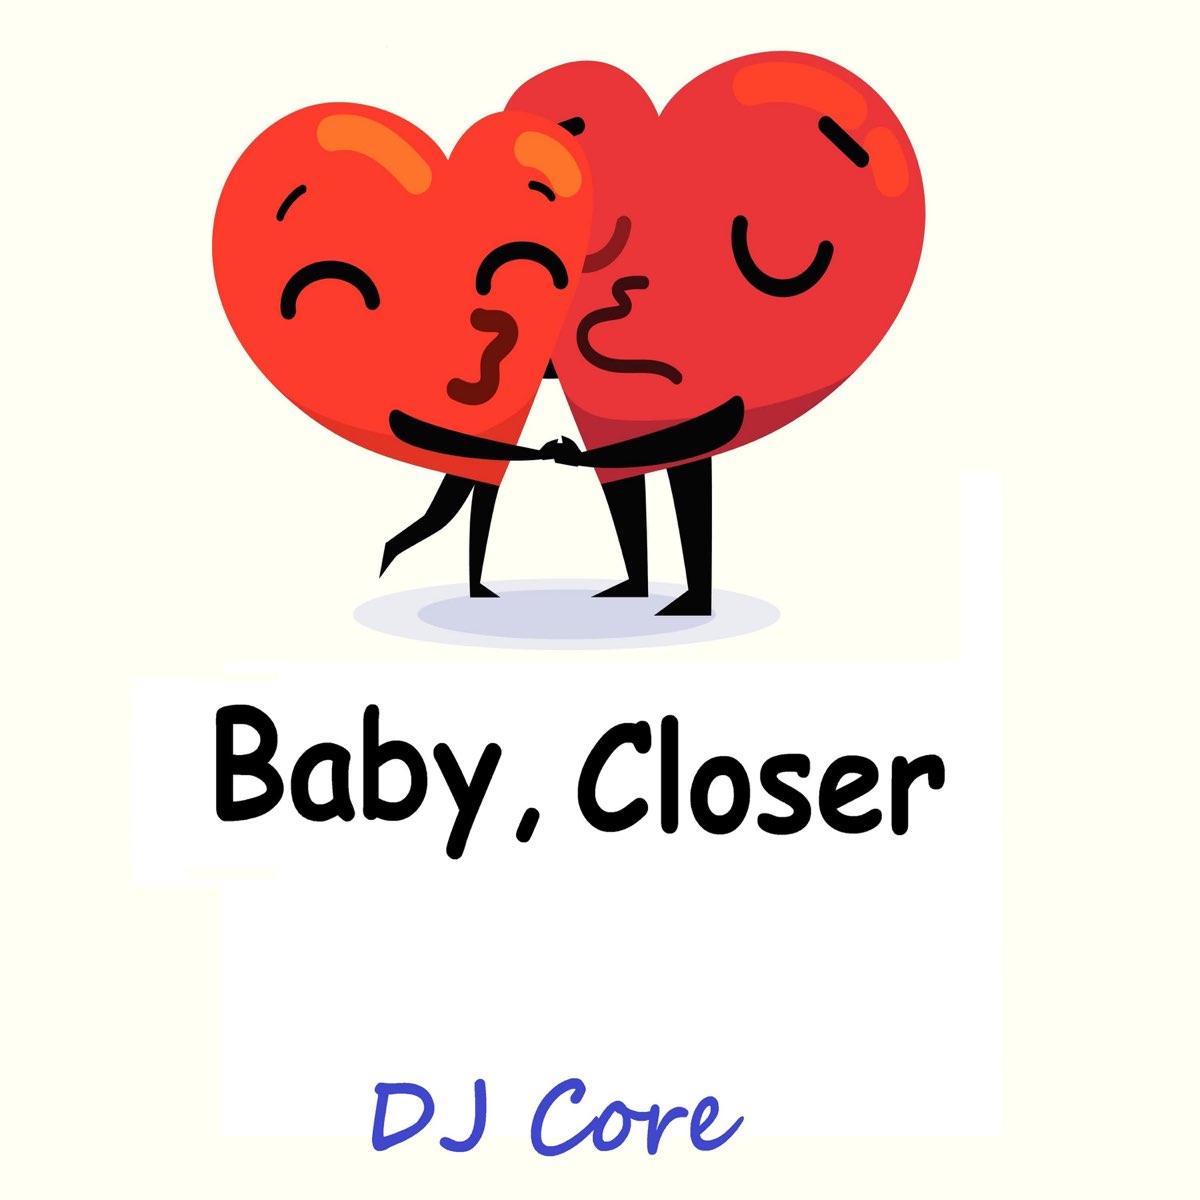 Baby closer. Baby Core. DJ Core.